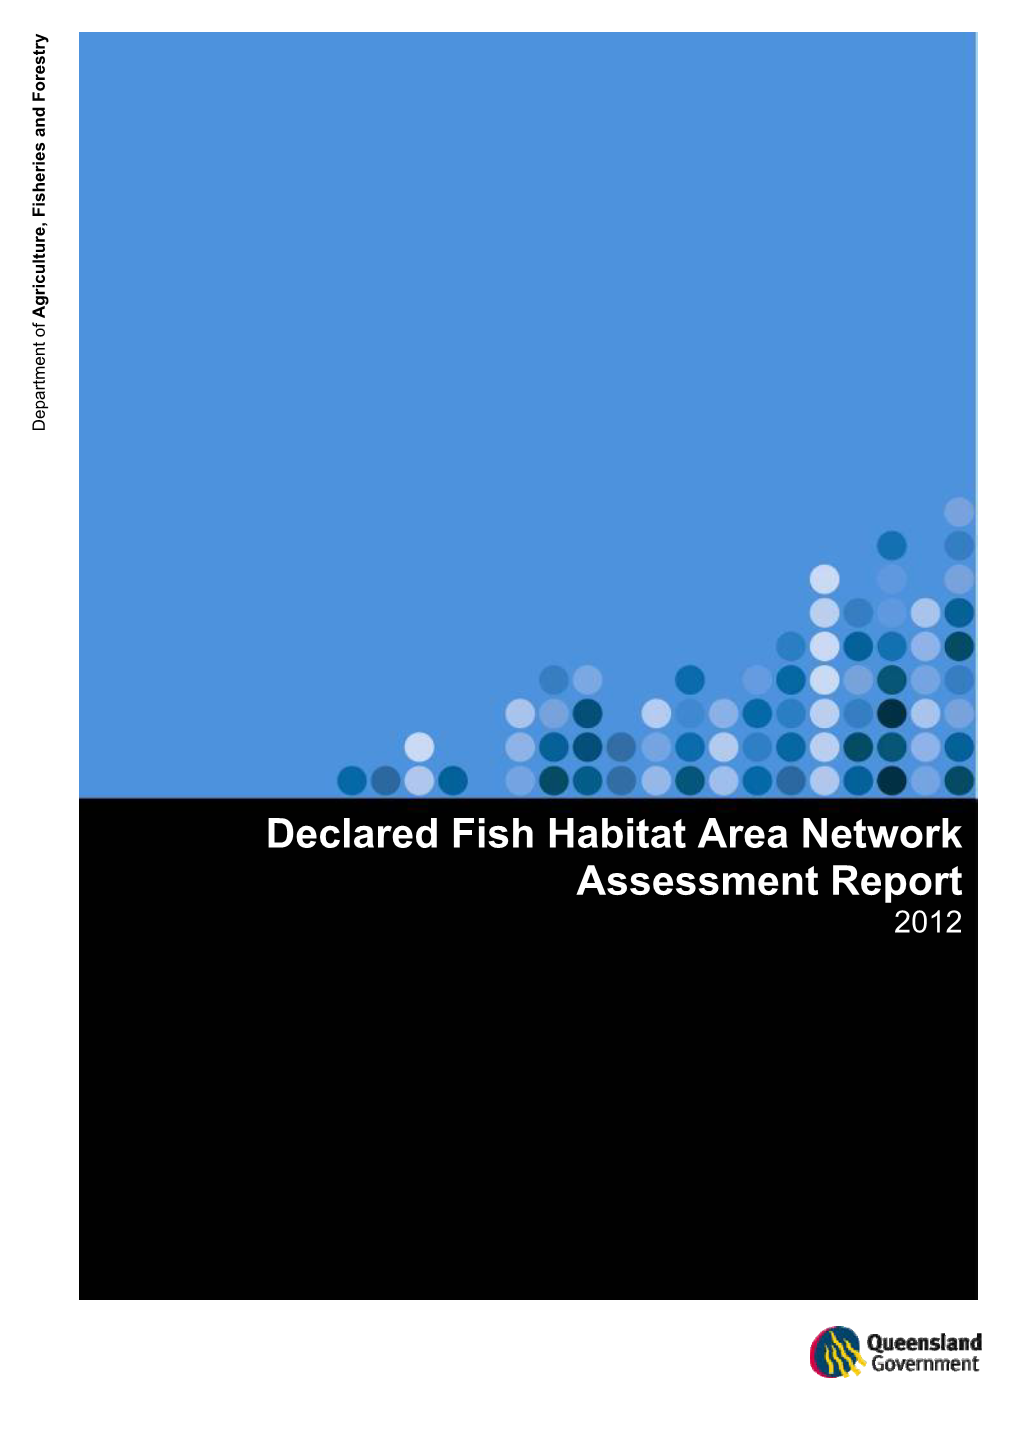 Declared Fish Habitat Area Network Assessment Report 2012 (PDF, 1.8